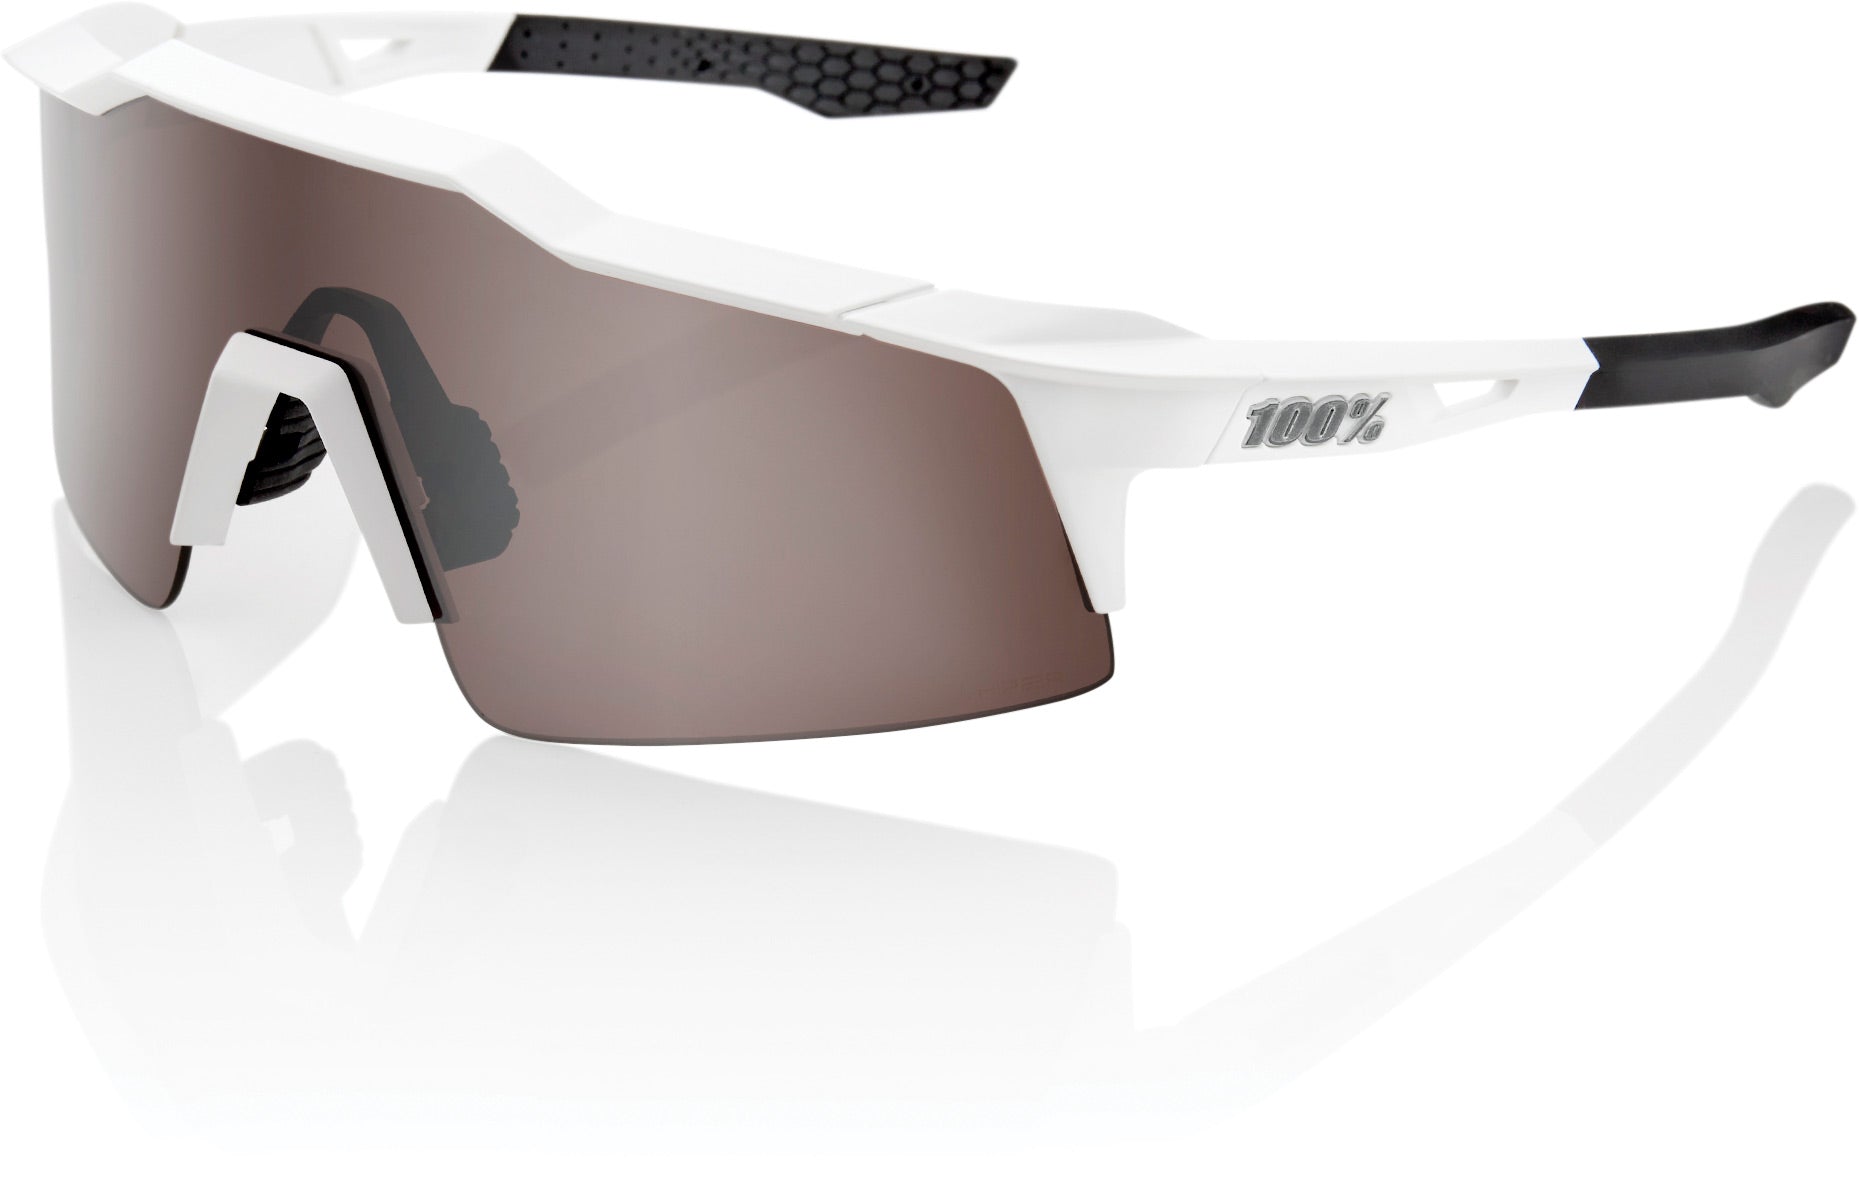 100% Speedcraft SL Glasses